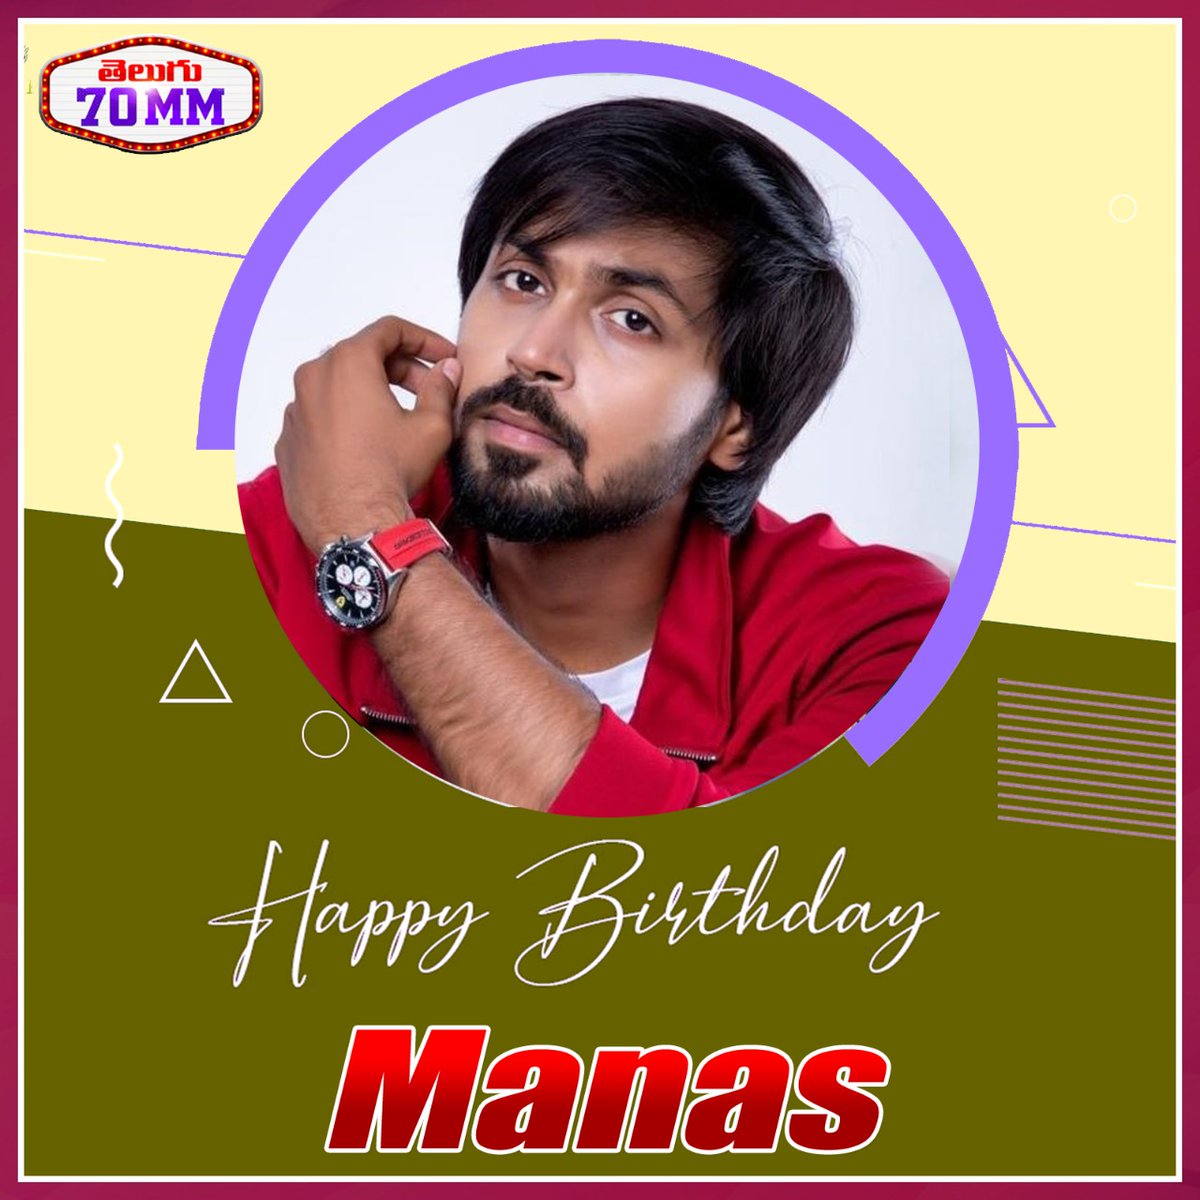 Team @Telugu70mmWeb Wishing Talented Actor @ActorMaanas a Very Happy Birthday #HappyBirthdayMaanas #HBDMaanas #Telugu70mm #Telugu70mmWishes